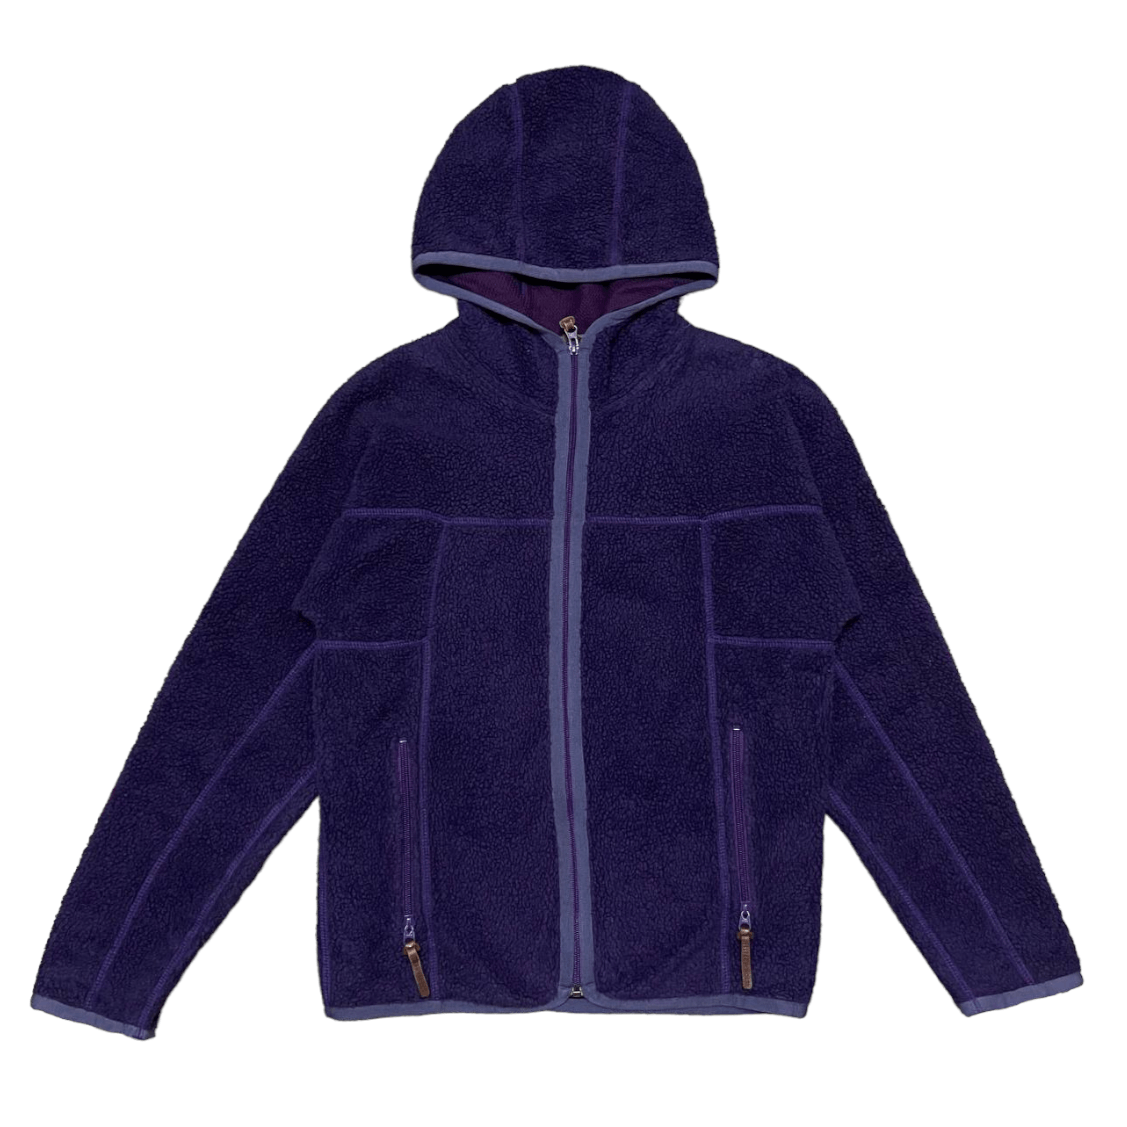 R.Newbold Fleece Zipper Hooded Jacket - 1